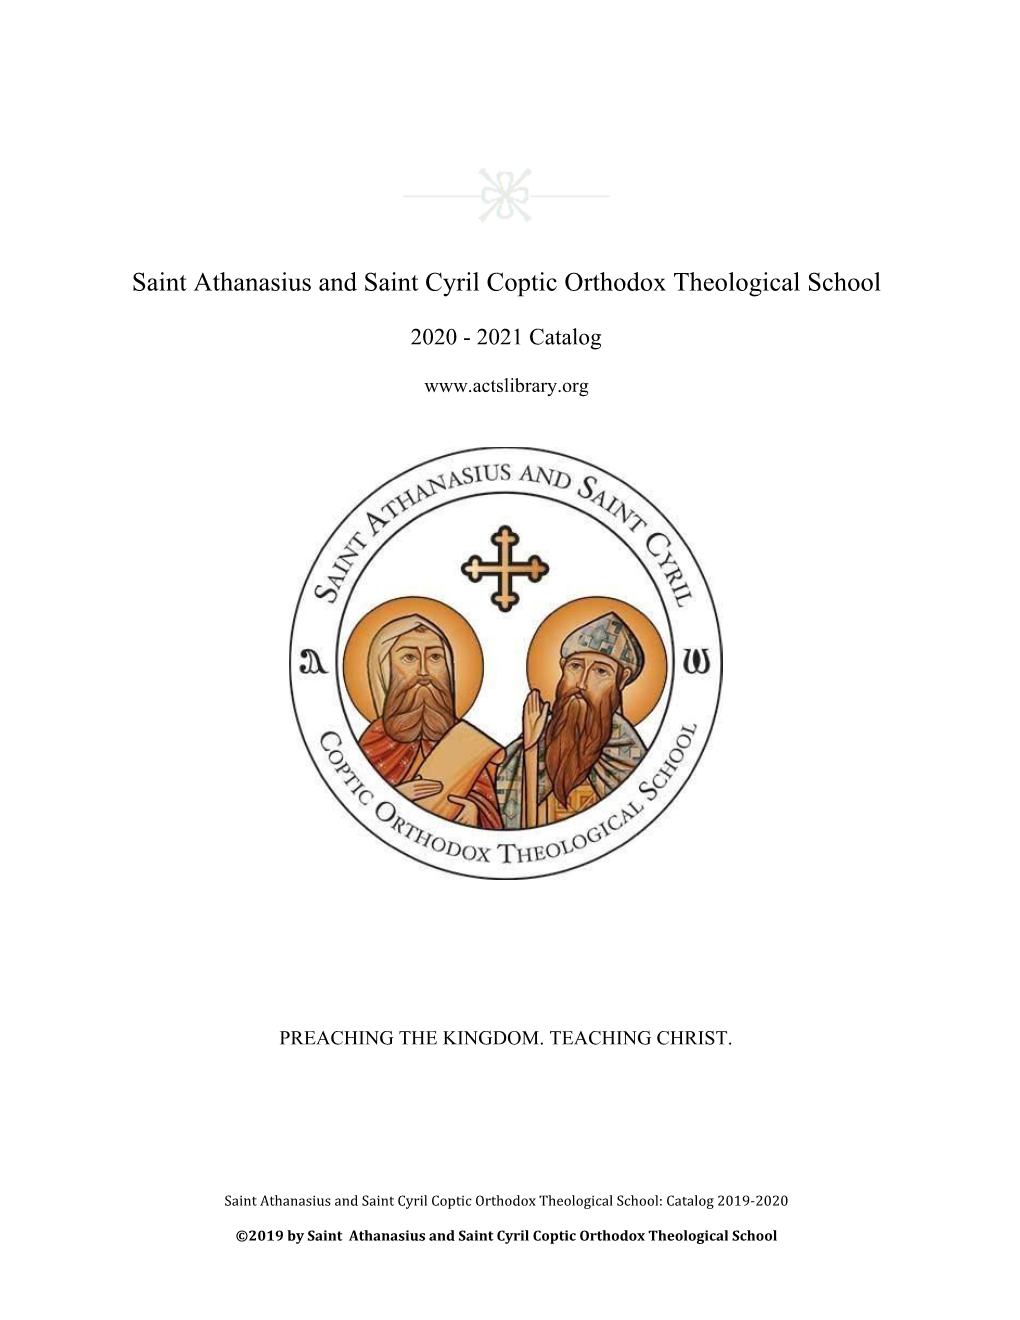 Saint Athanasius and Saint Cyril Coptic Orthodox Theological School